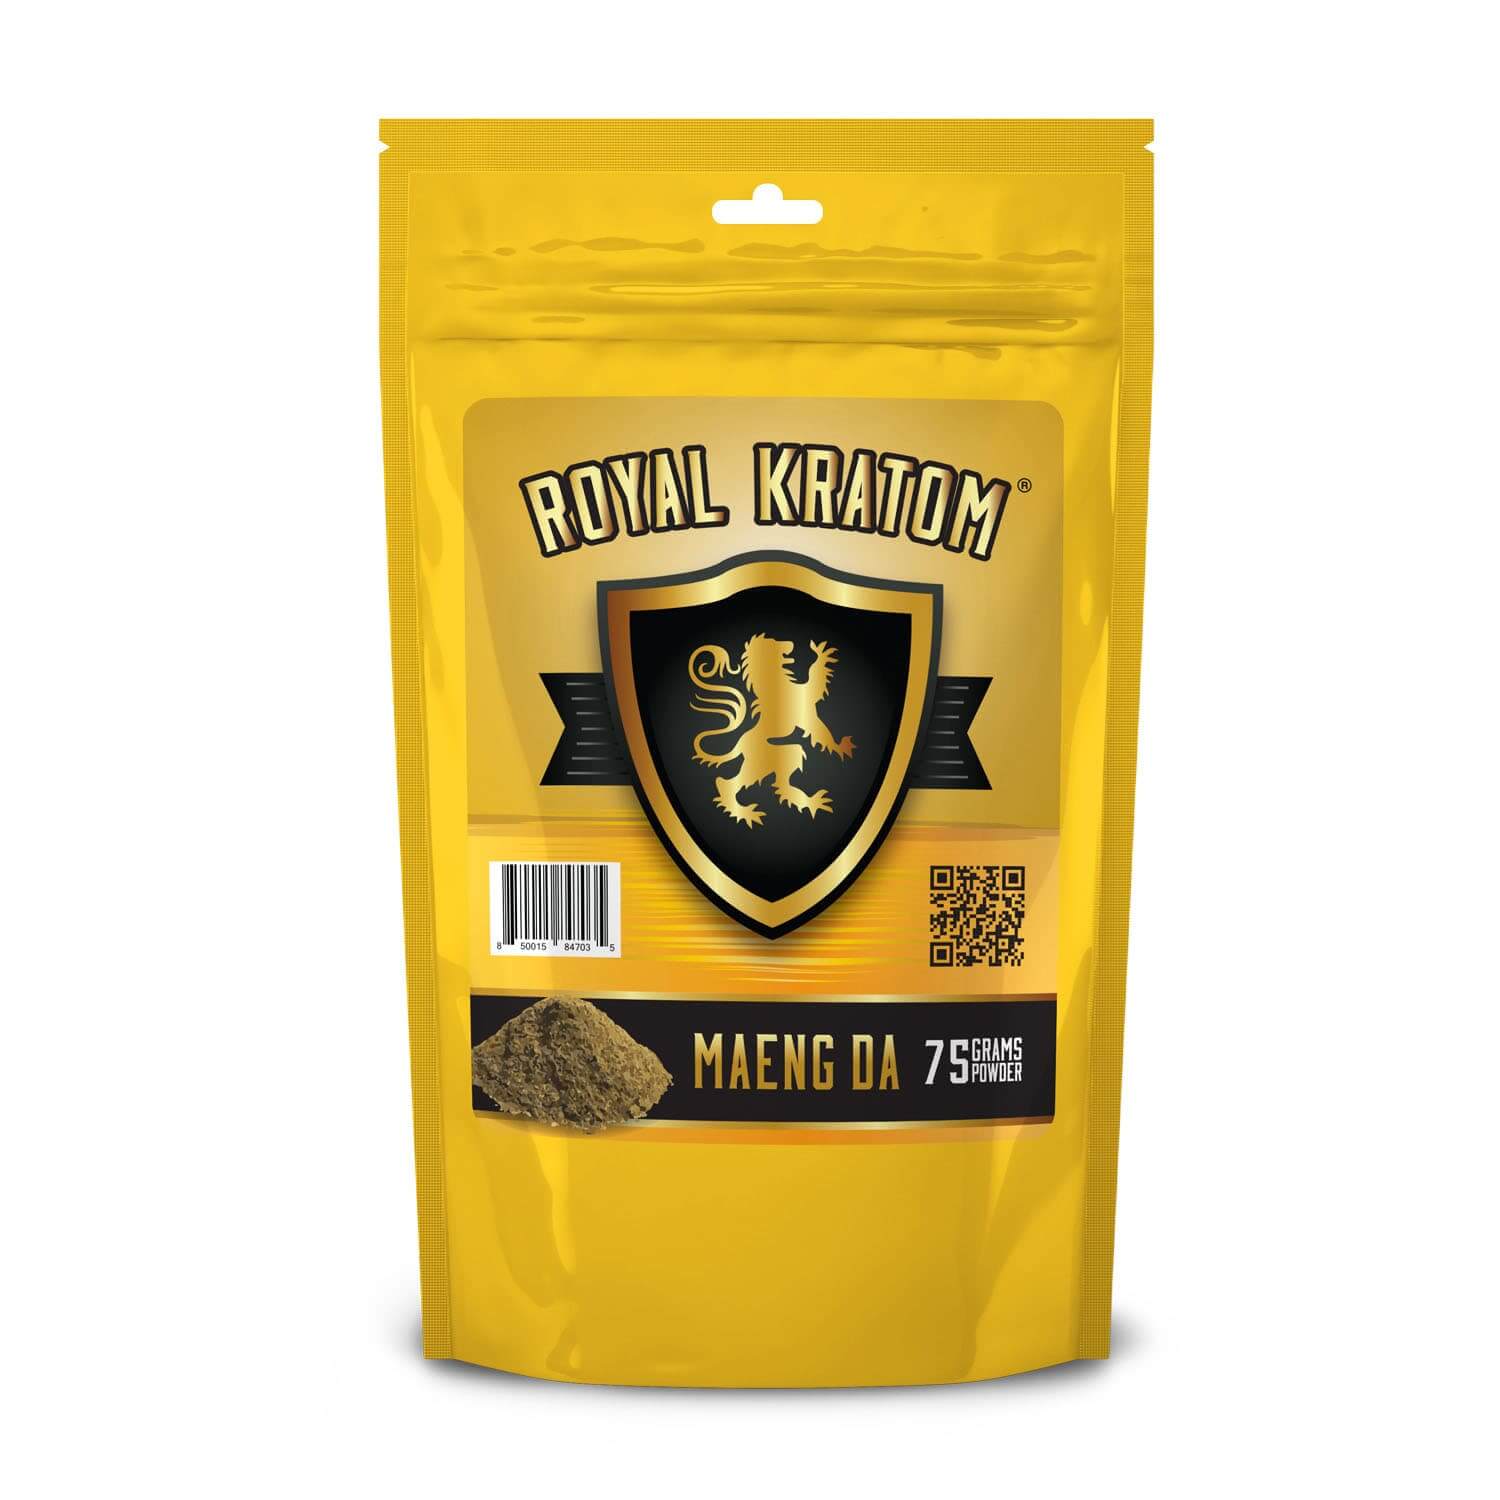 Bag of Royal Kratom Maeng Da powder